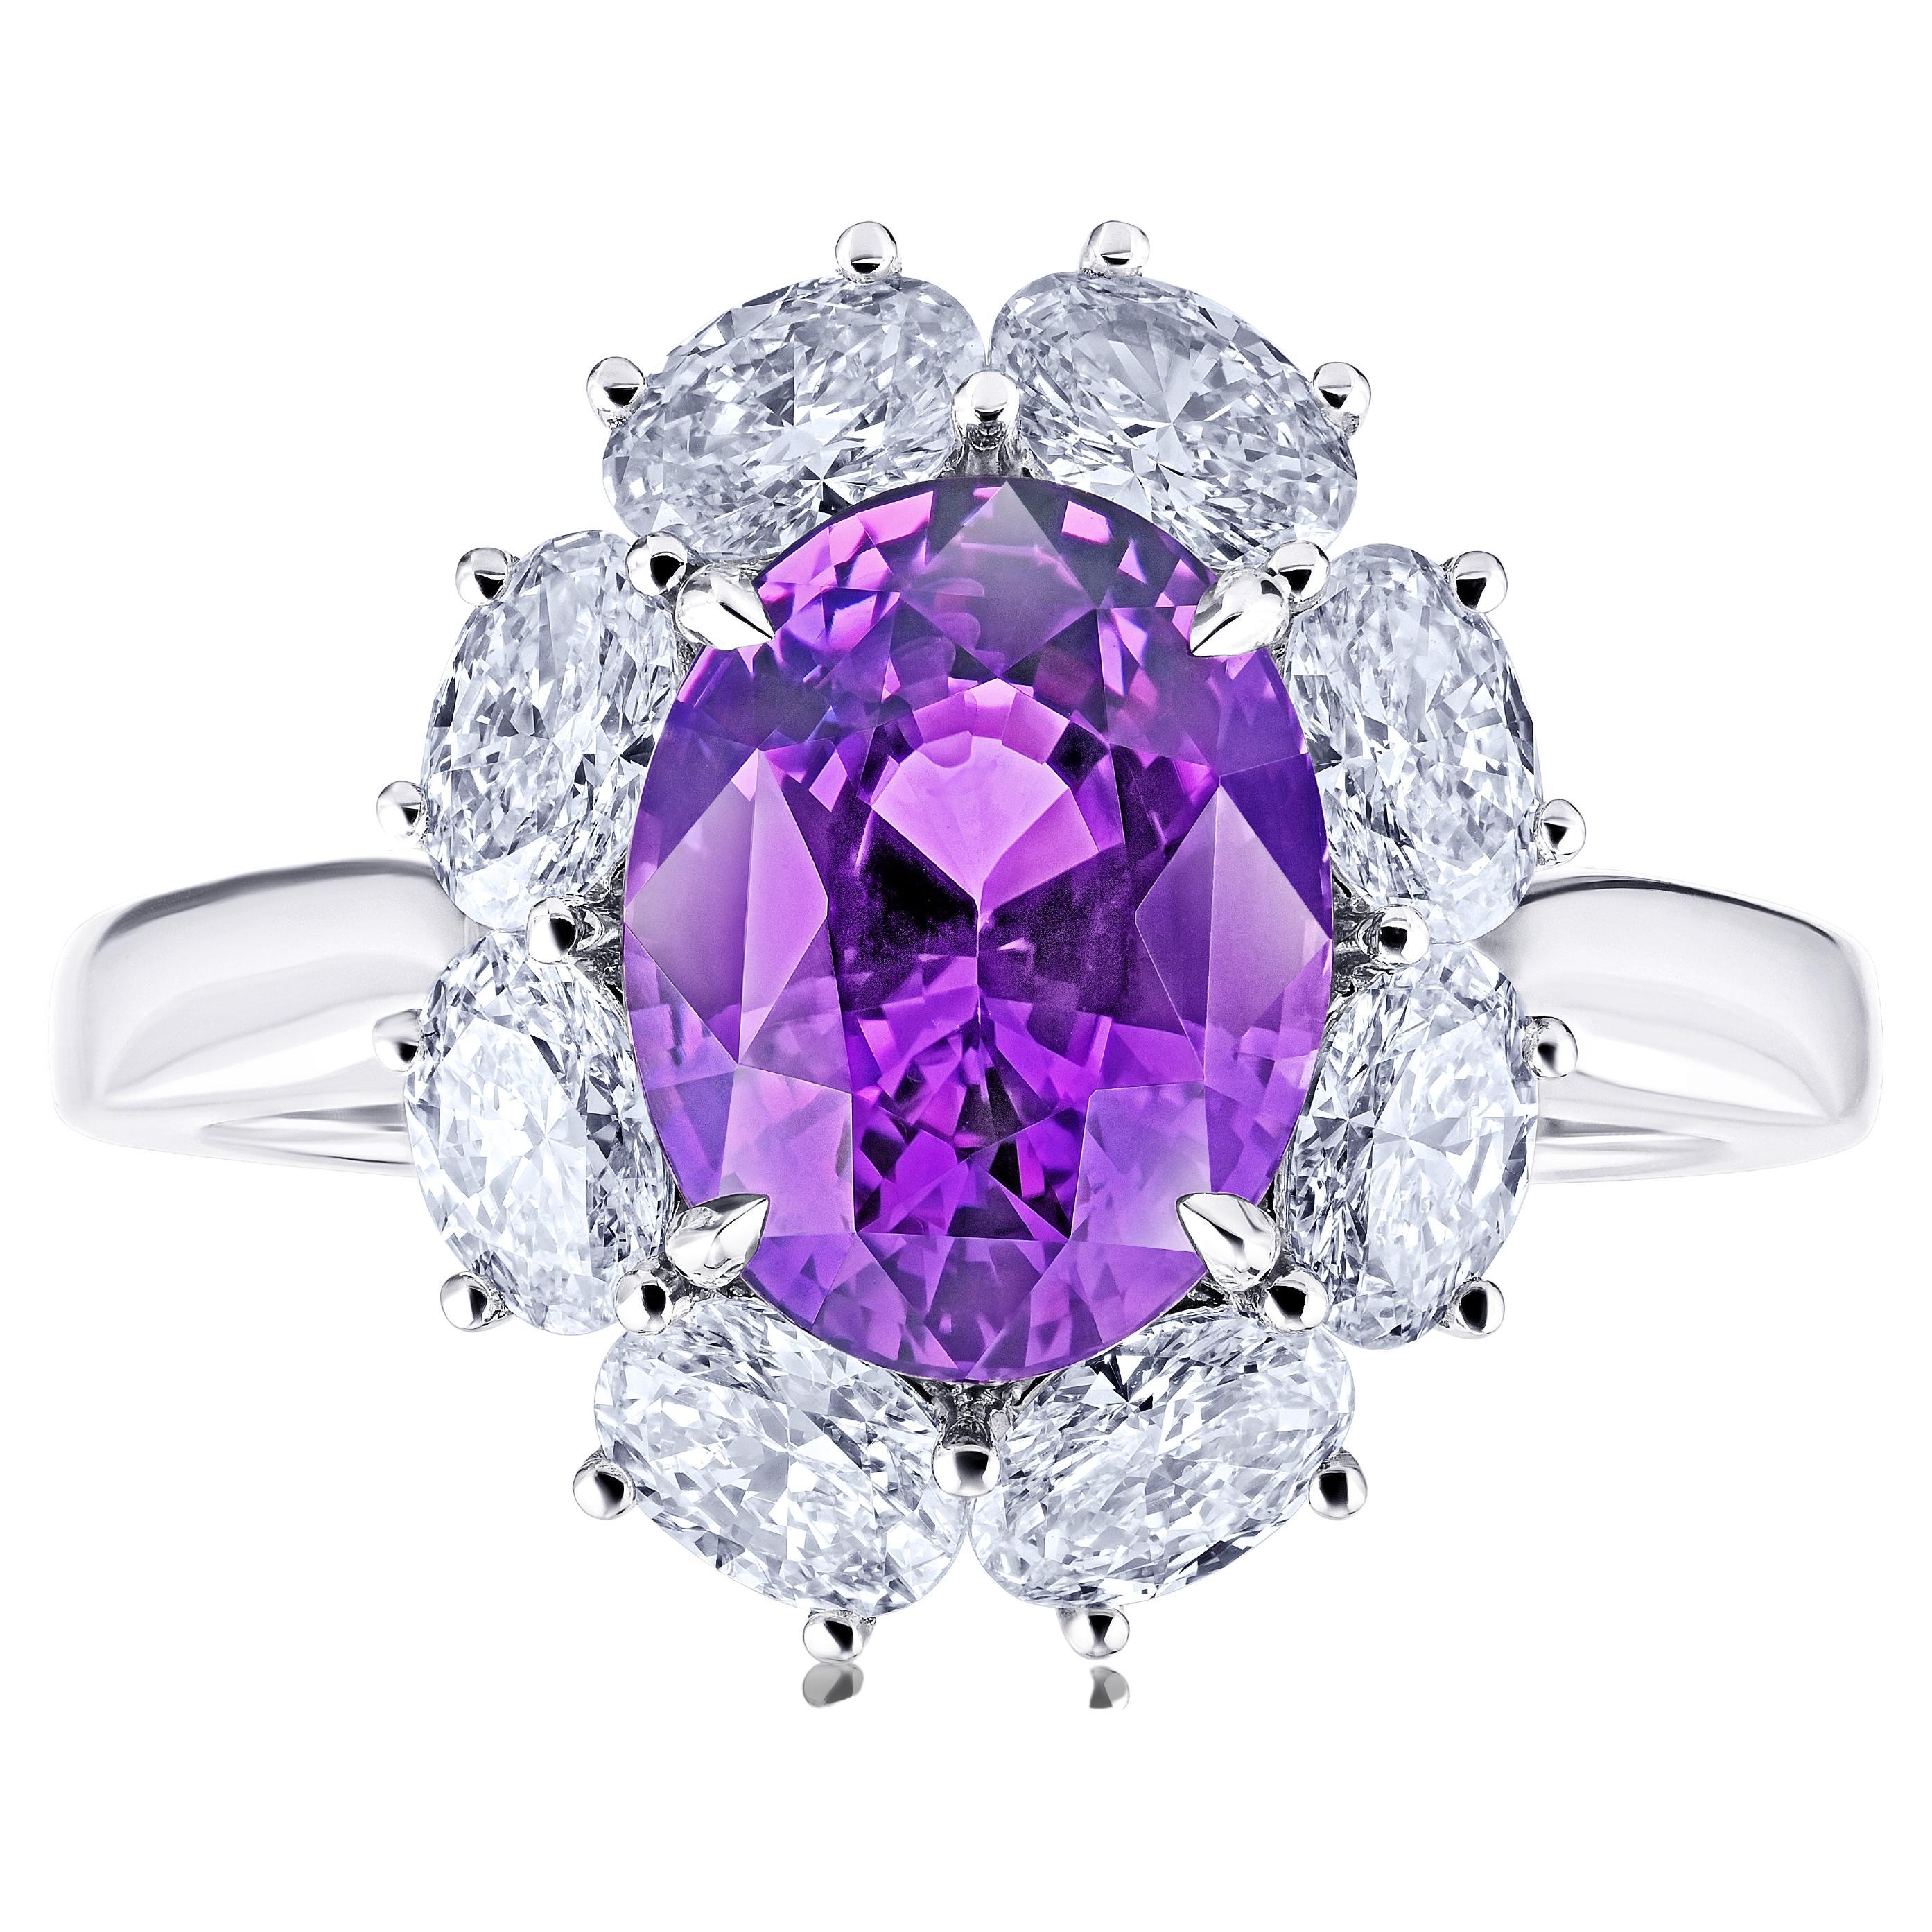 3.56 Carat Oval Purple Sapphire and Diamond Platinum Ring